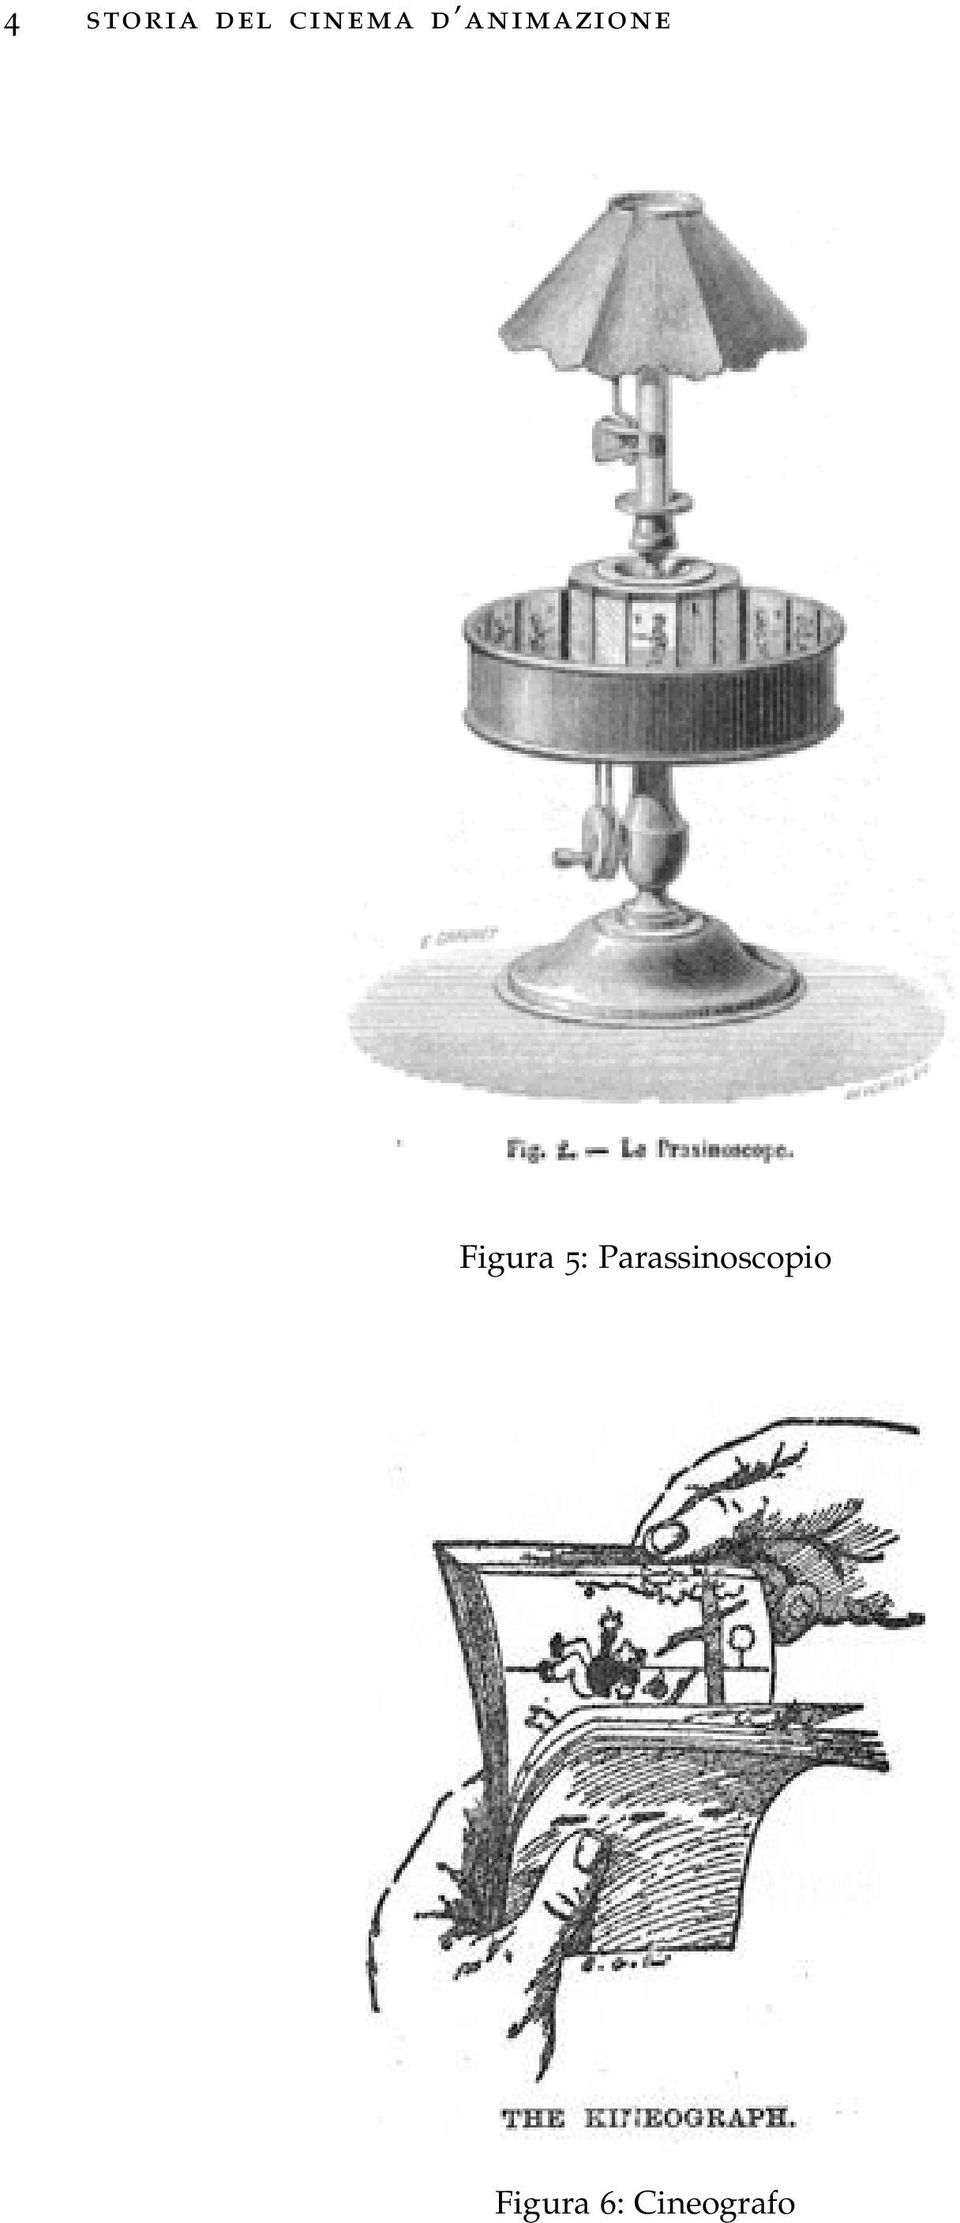 5: Parassinoscopio